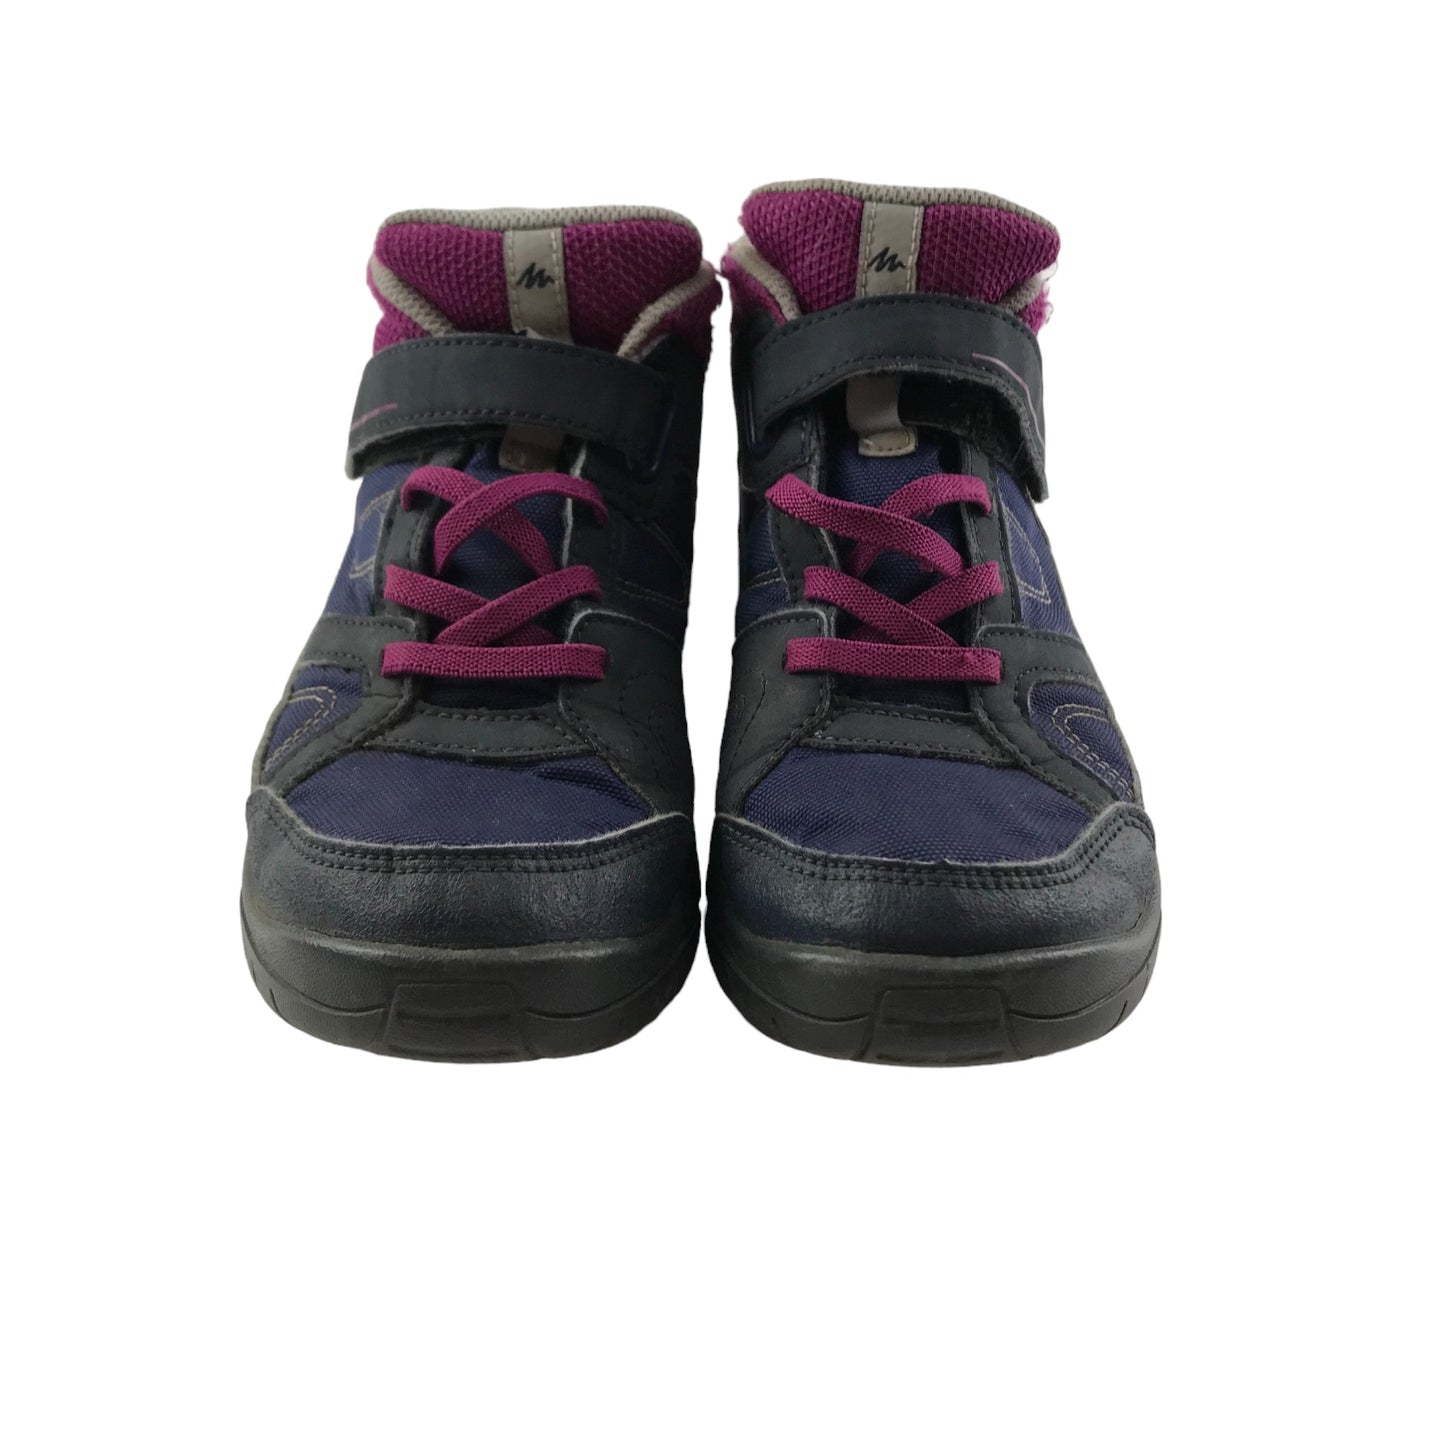 Trespass Snow Boots Shoe Size 13 Junior Blue Warm lined Waterproof